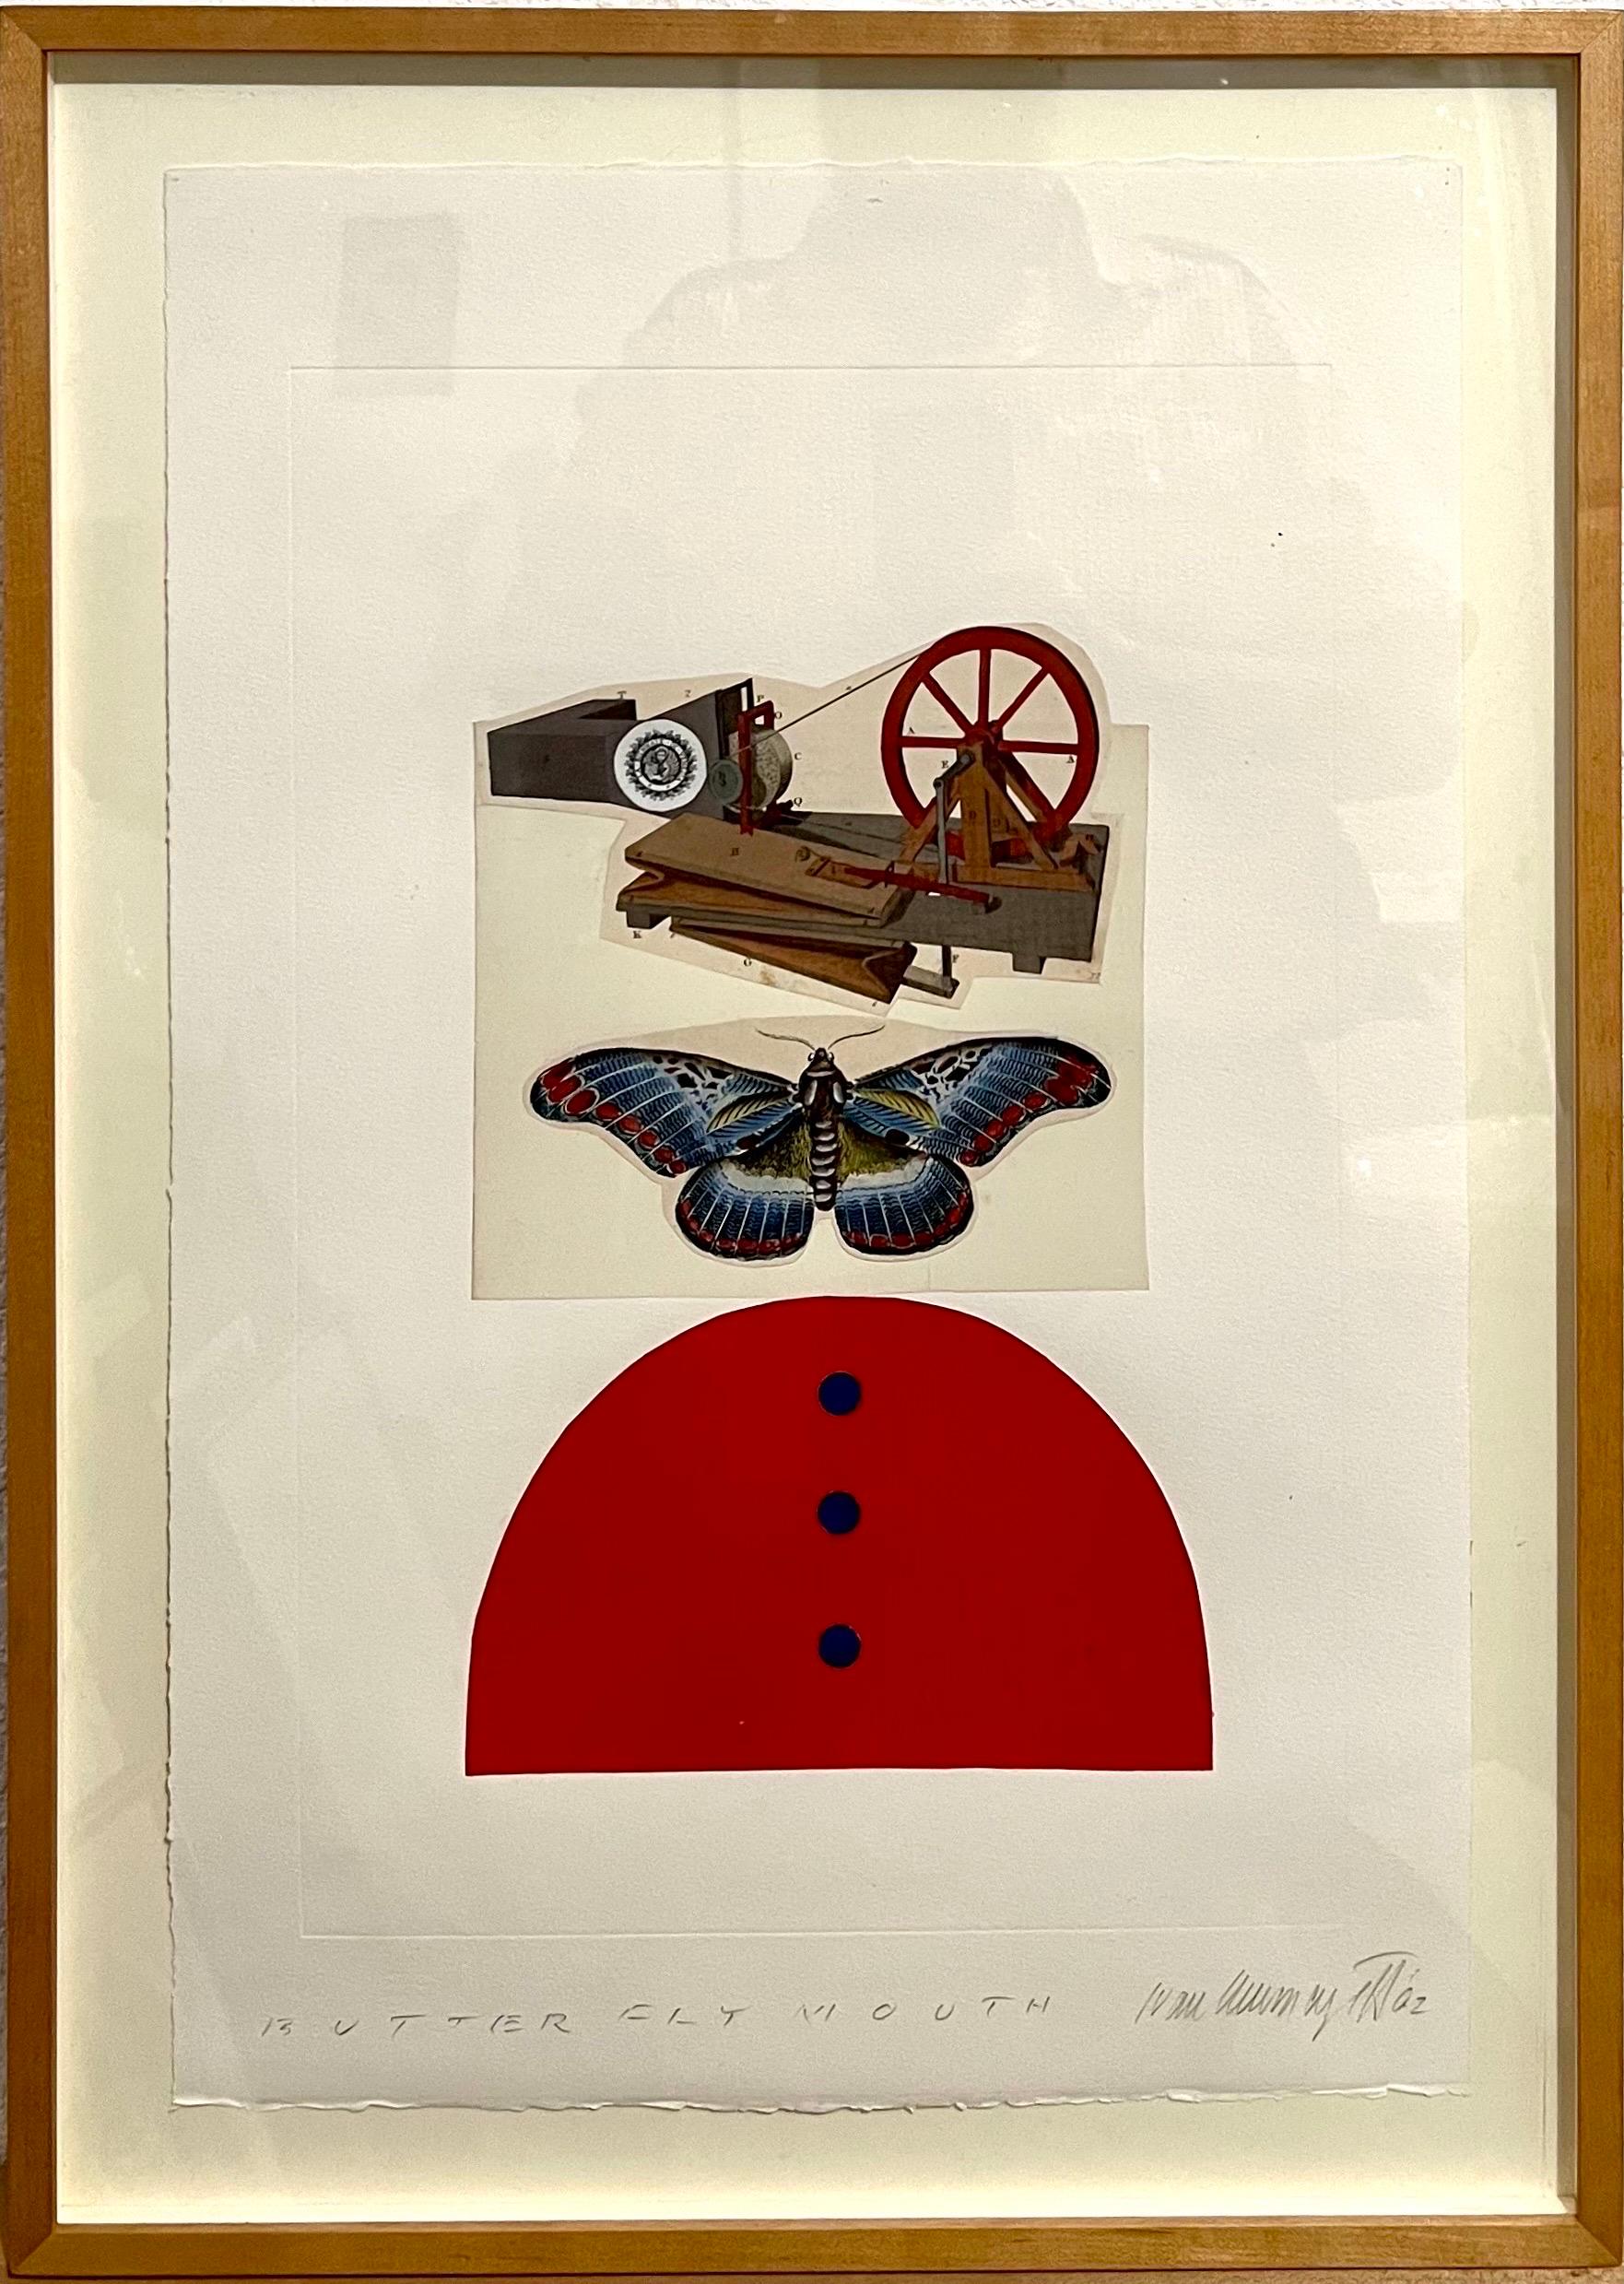 Ivan Chermayeff (1932-2017): 
Schmetterlingsmaul
Collage in Mischtechnik, 2002, handsigniert "Ivan Chermayeff" und datiert unten rechts, betitelt unten links.
Bären Label von David Findlay Jr. Gallery, NY.

22 1/2 x 15 Zoll (Blatt), 25 3/4 x 18 1/4